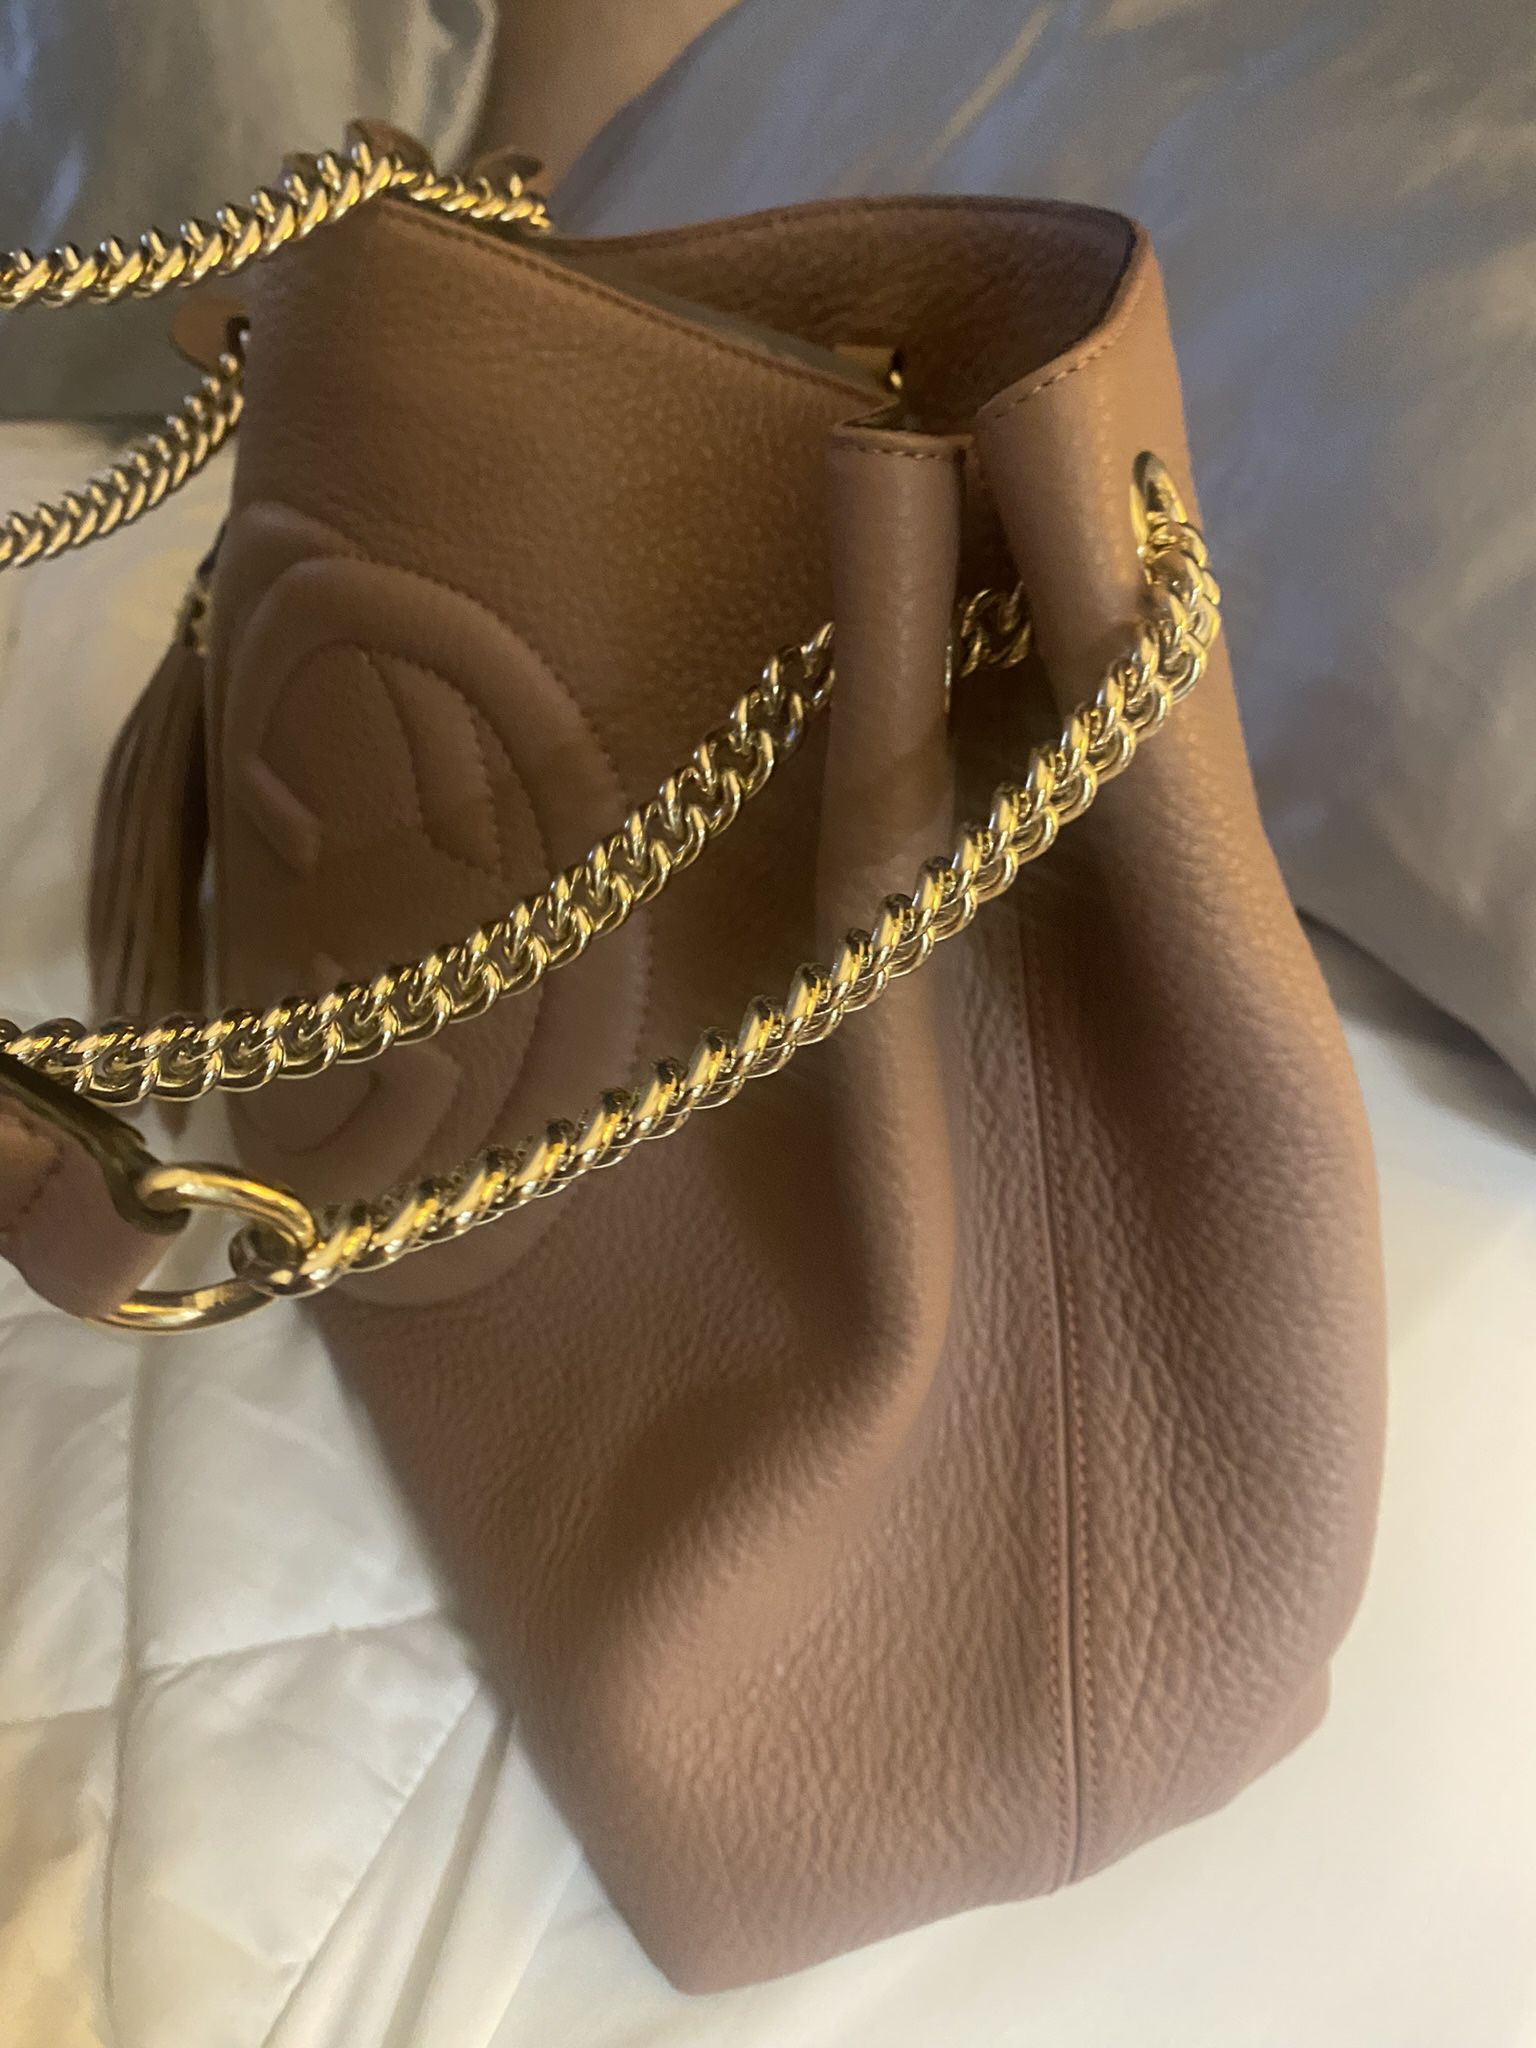 Gucci Soho tote Pebbled leather medium handbag